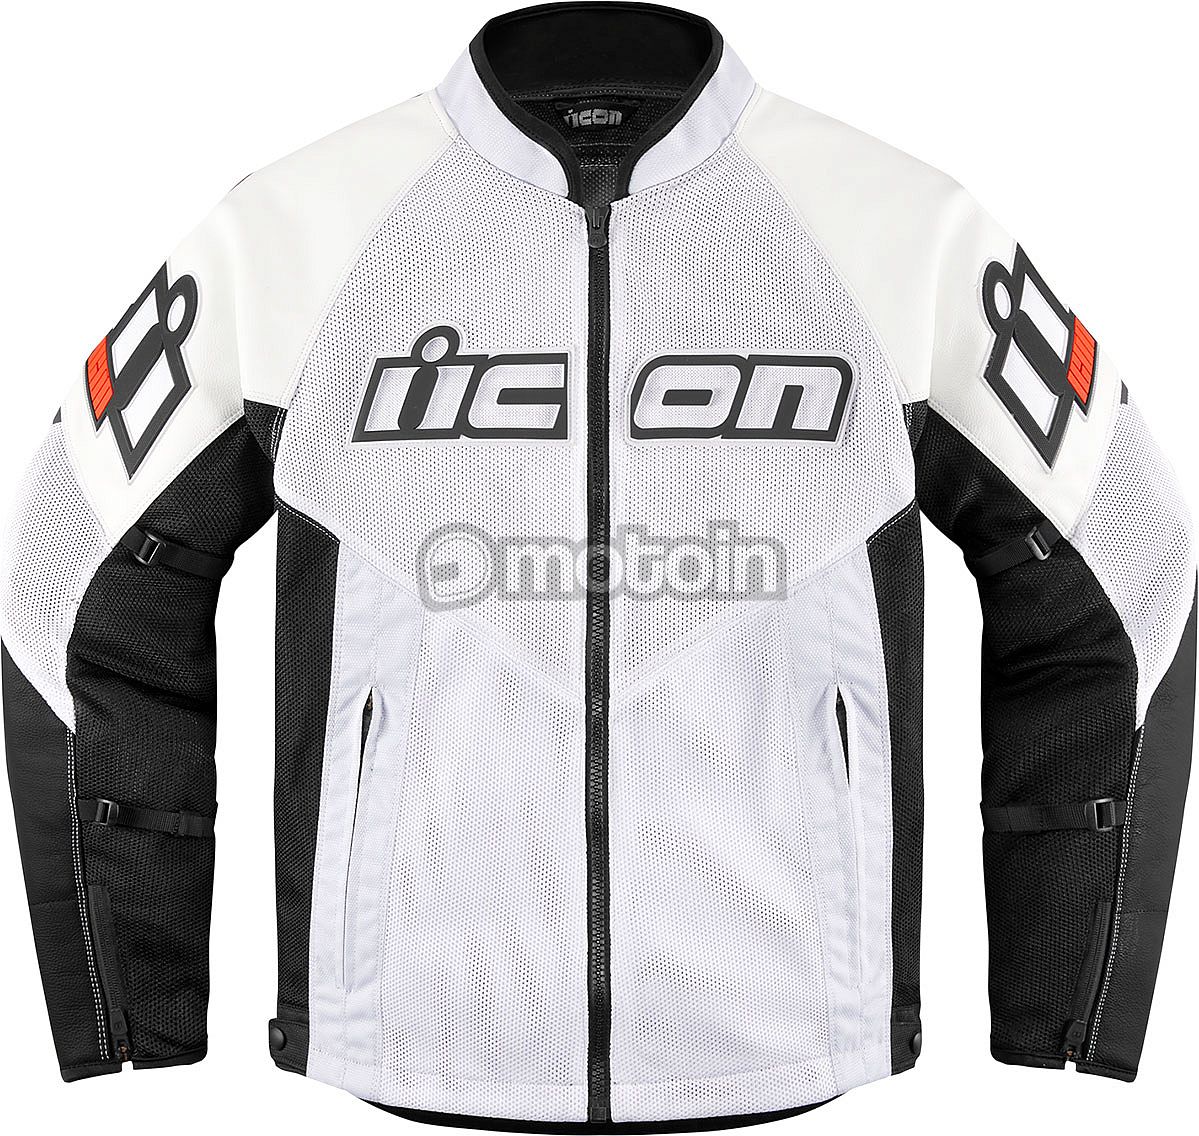 Icon Mesh AF leather/textile jacket, Item de segunda escolha